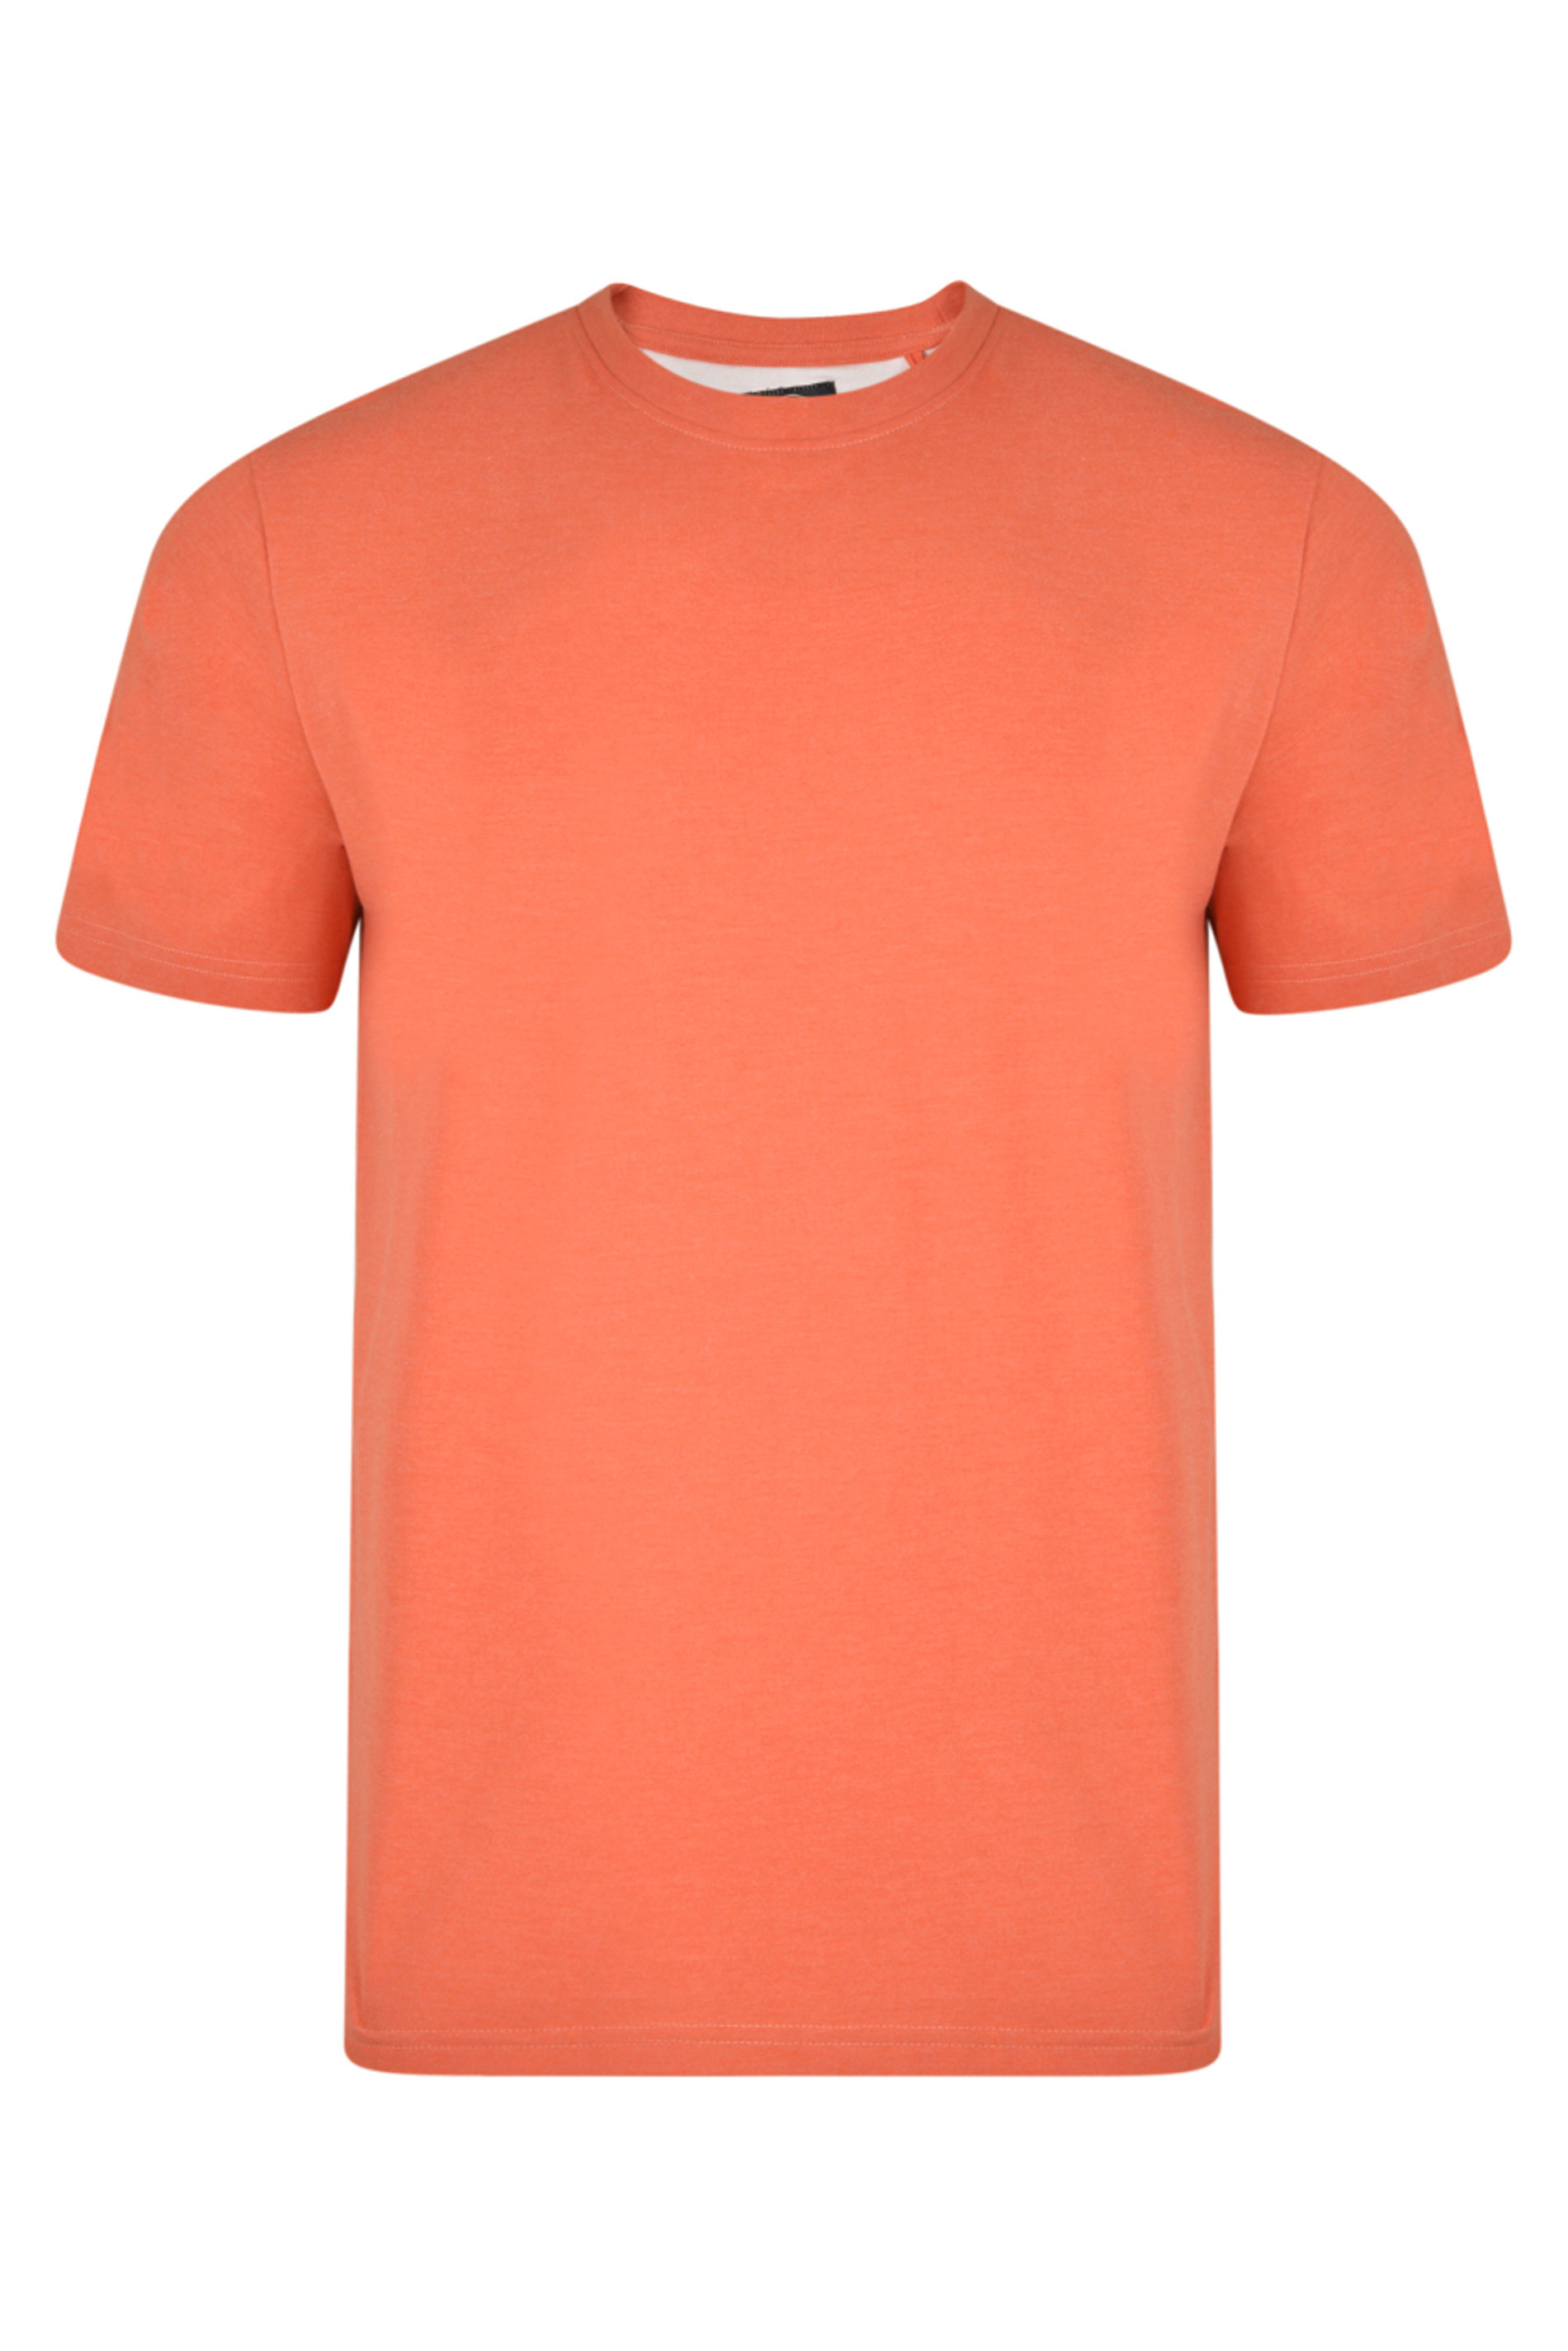 KAM Orange Plain T-Shirt | BadRhino